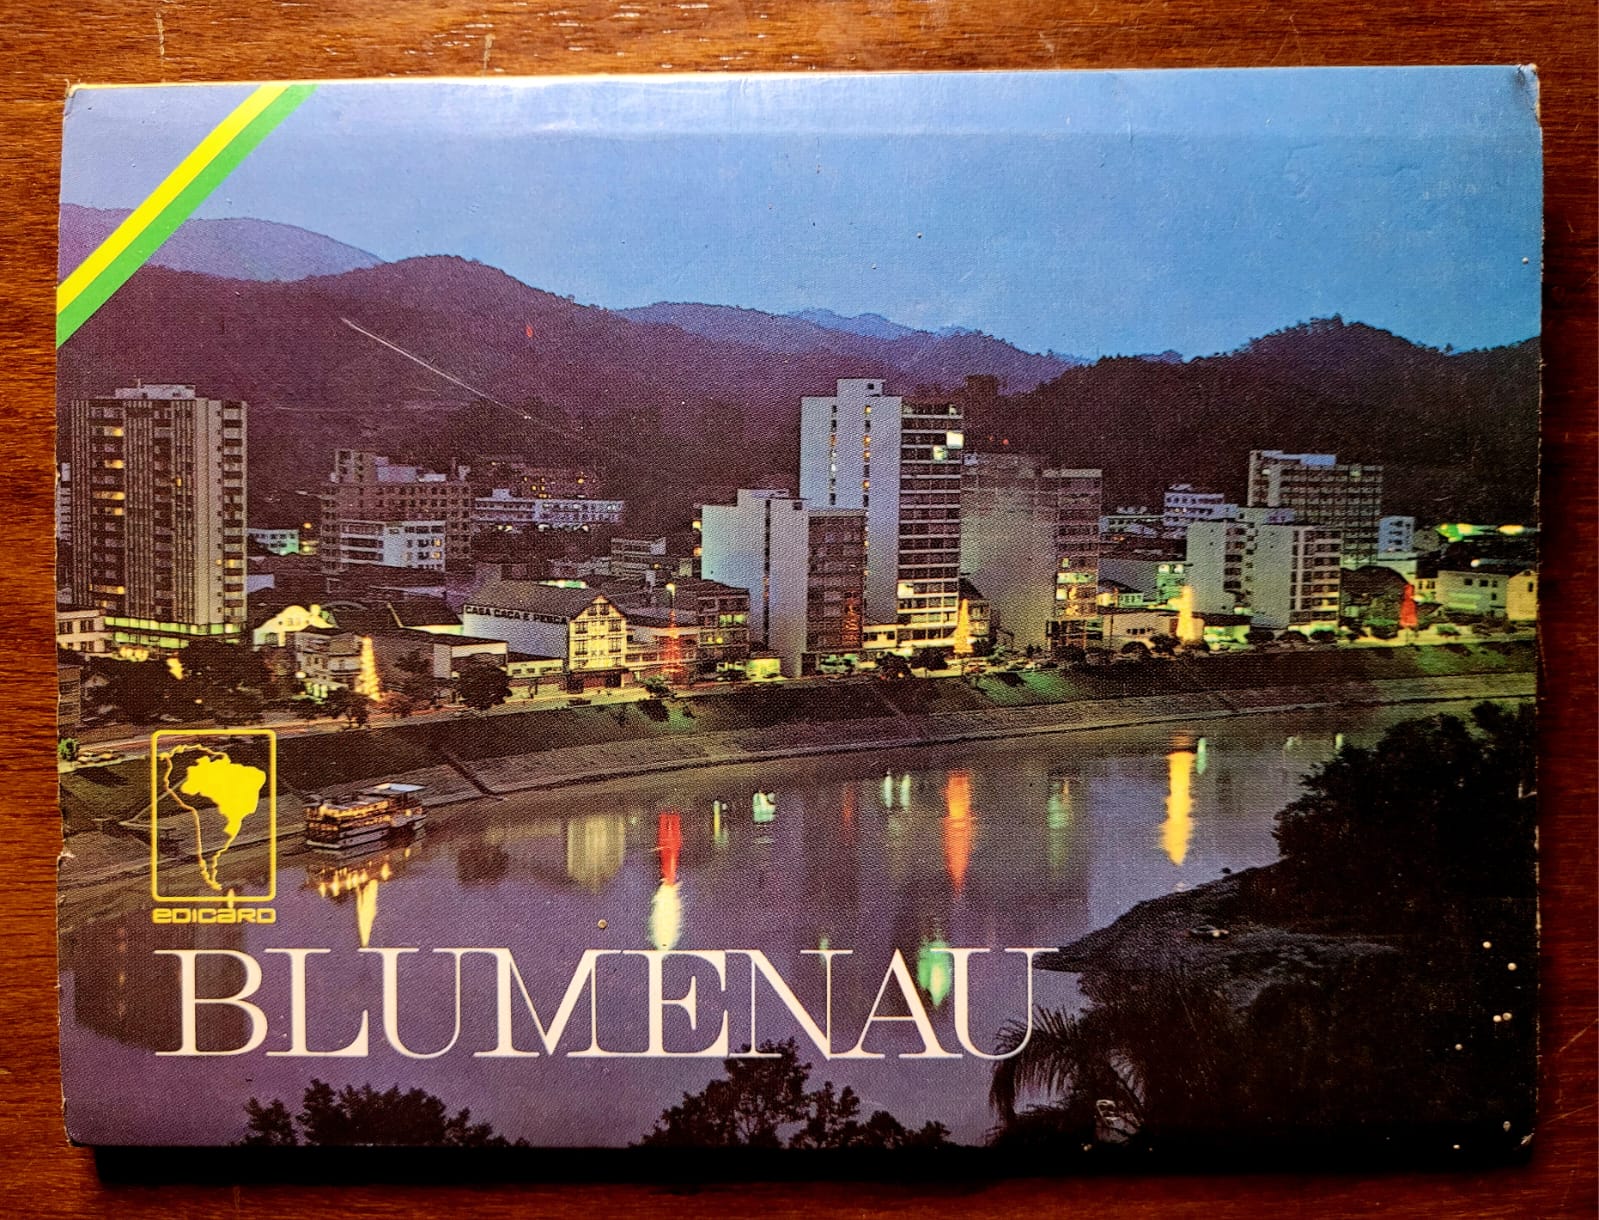 Cartao Postal Edicard Blumenau 1 Casa do Colecionador